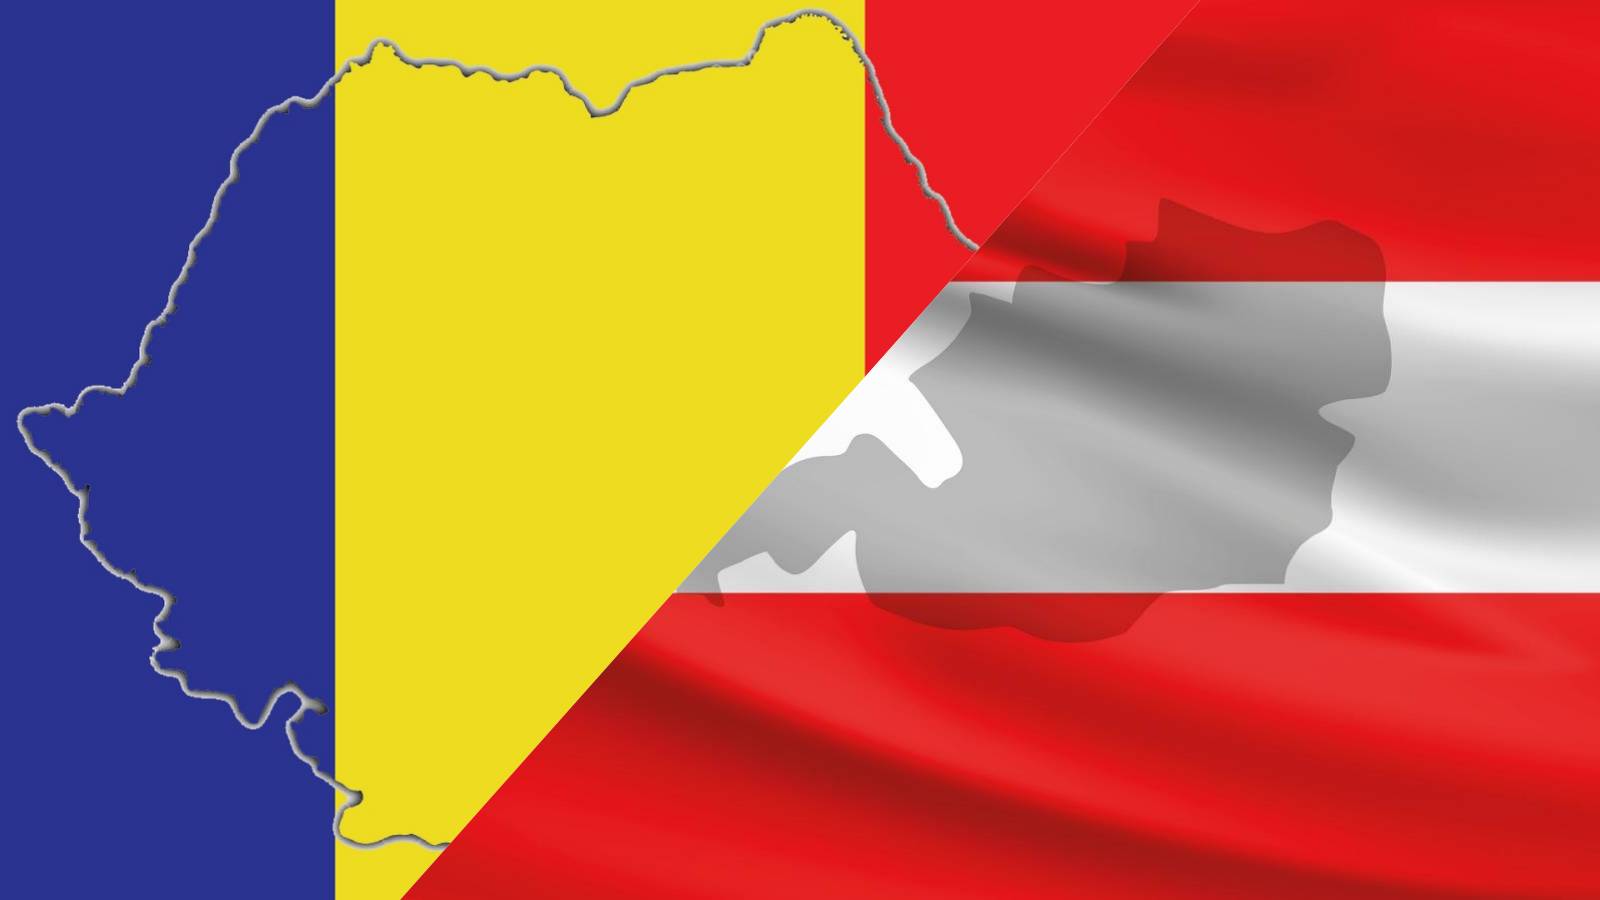 Austria Merge Consiliul JAI Masurile MAJORE cerute Nehammer Schengen Romania